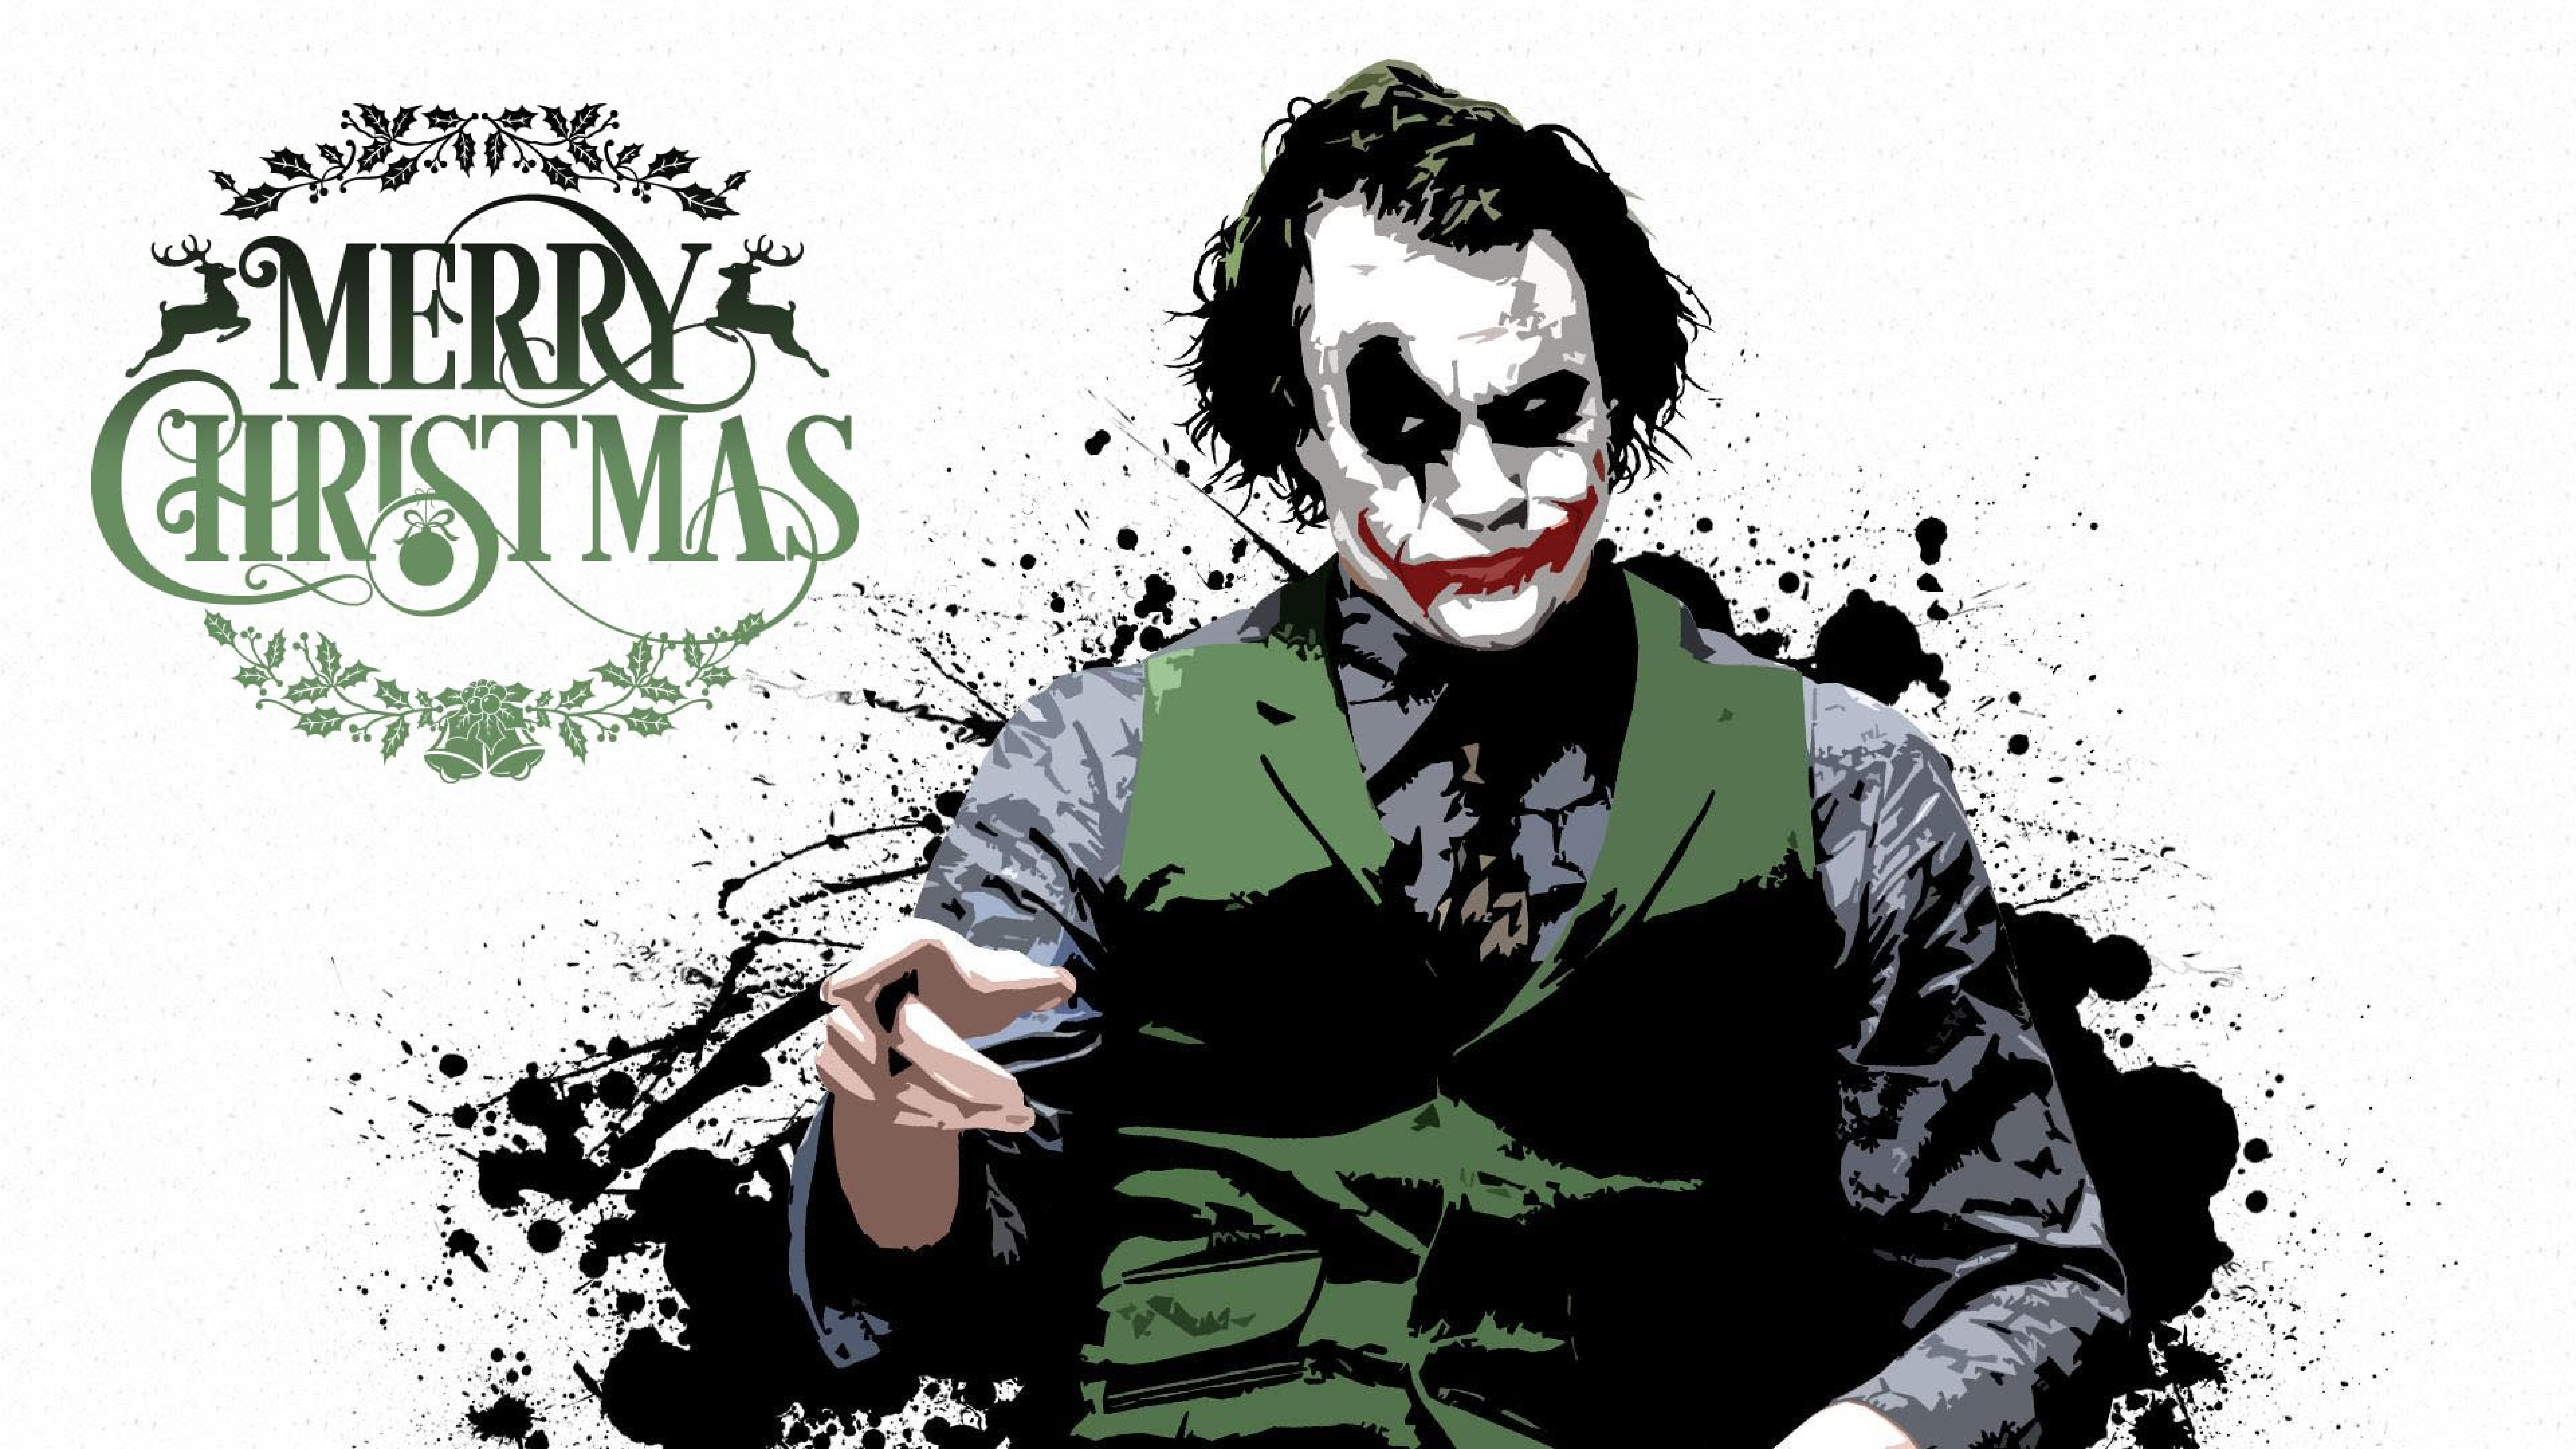 batman joker christmas